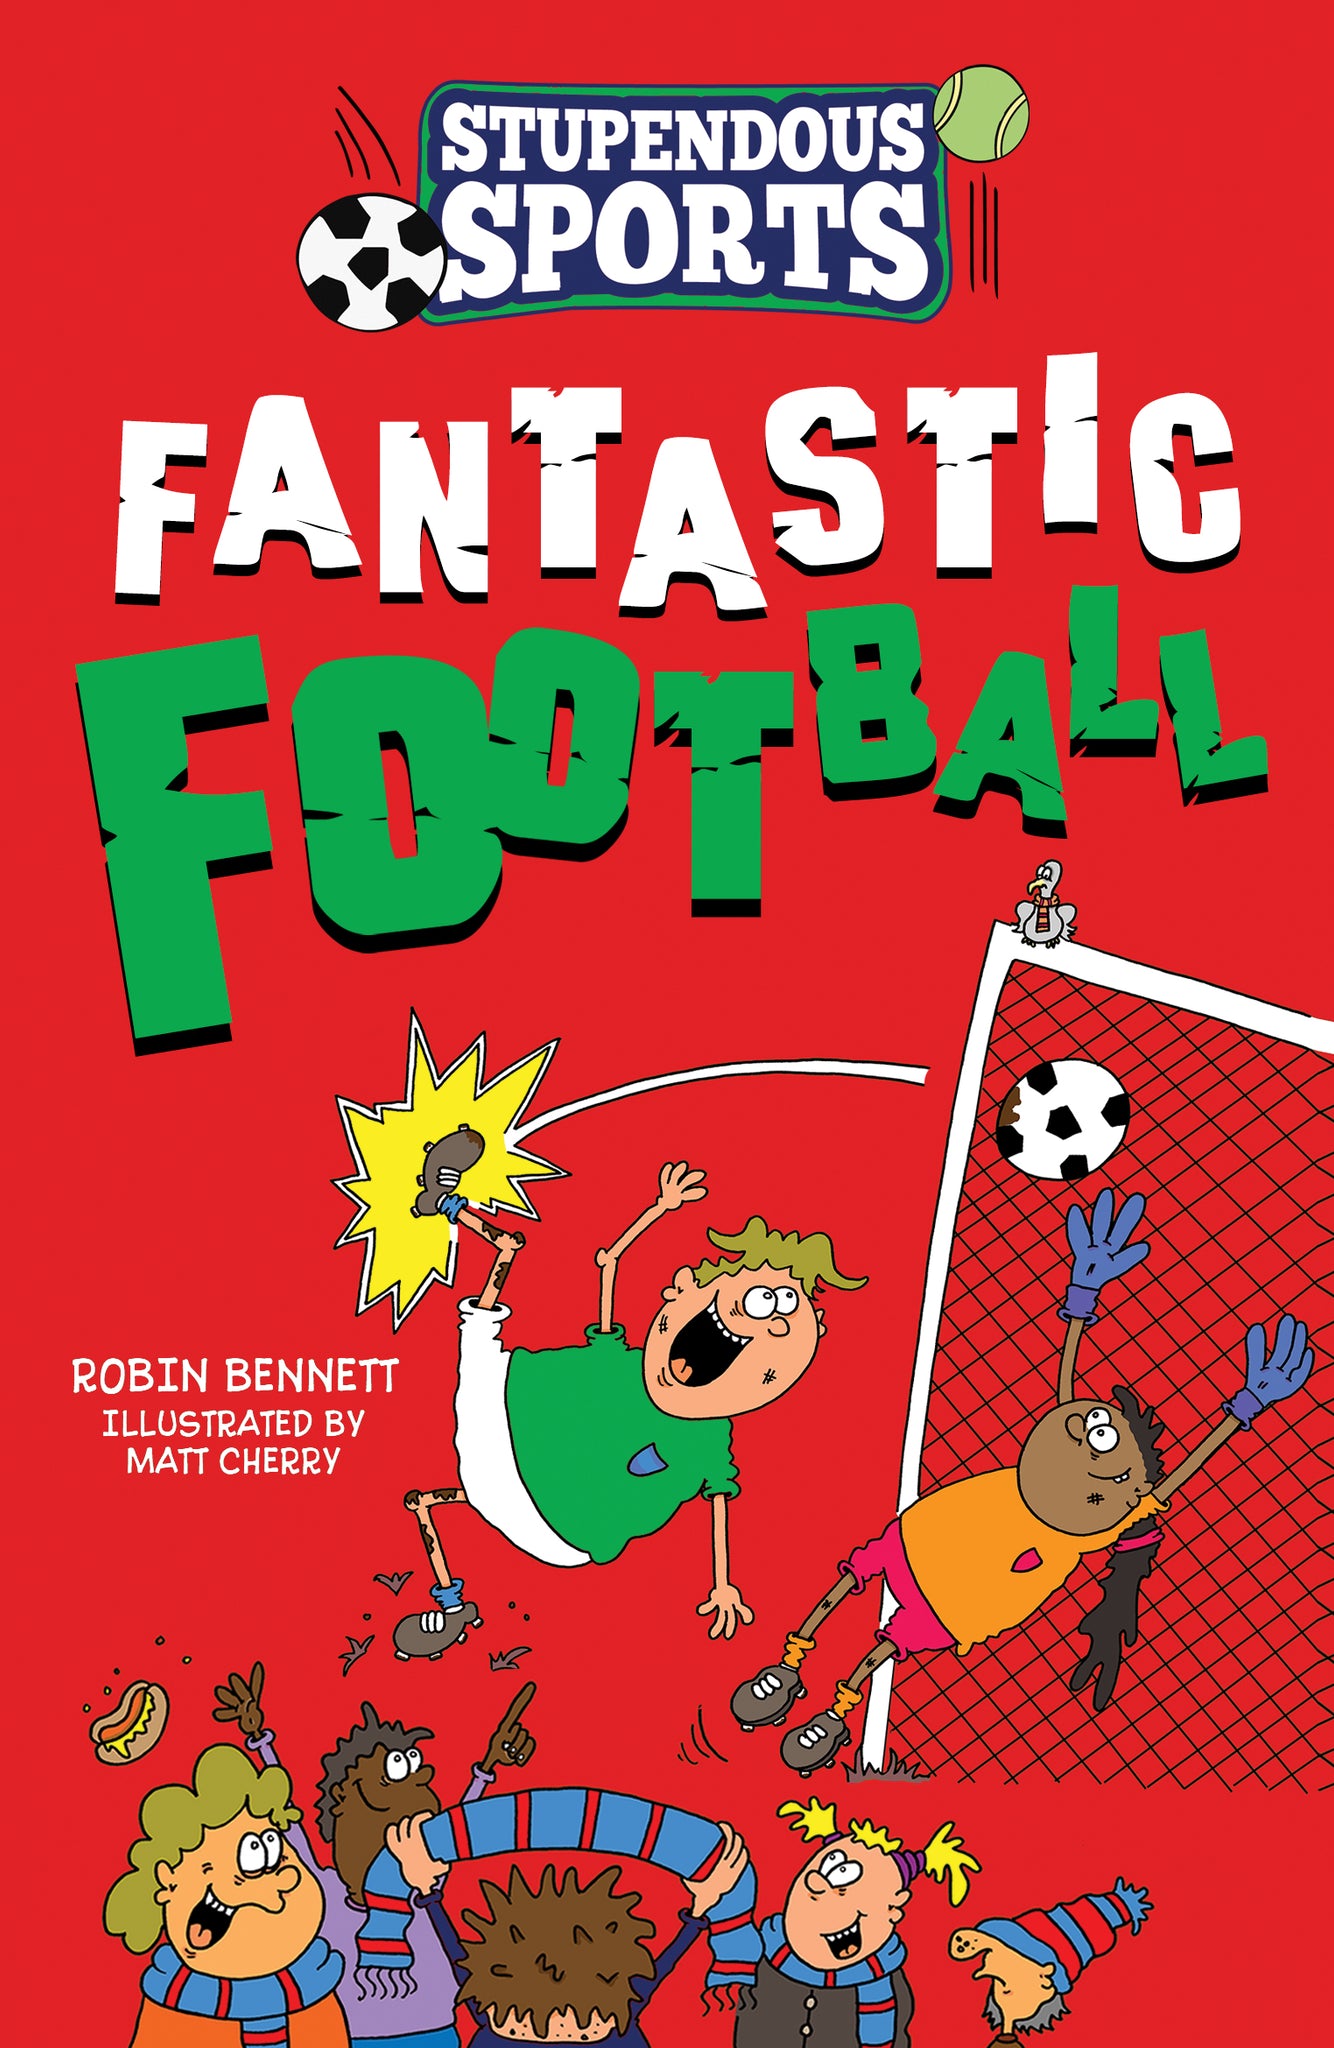 'Fantastic Football' by Robin Bennett